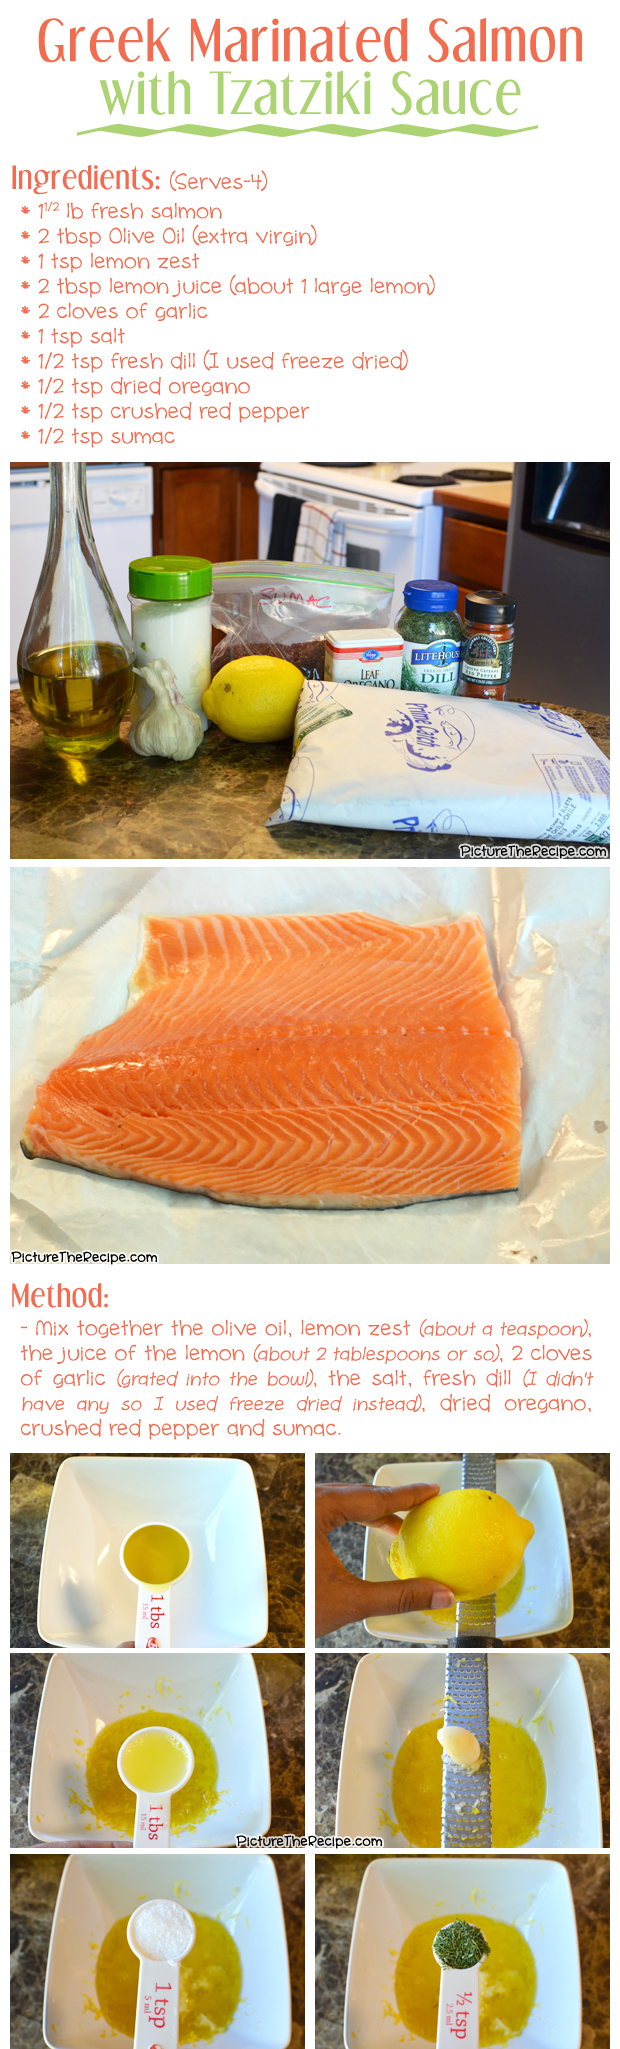 Greek Marinated Salmon Recipe- Part 1